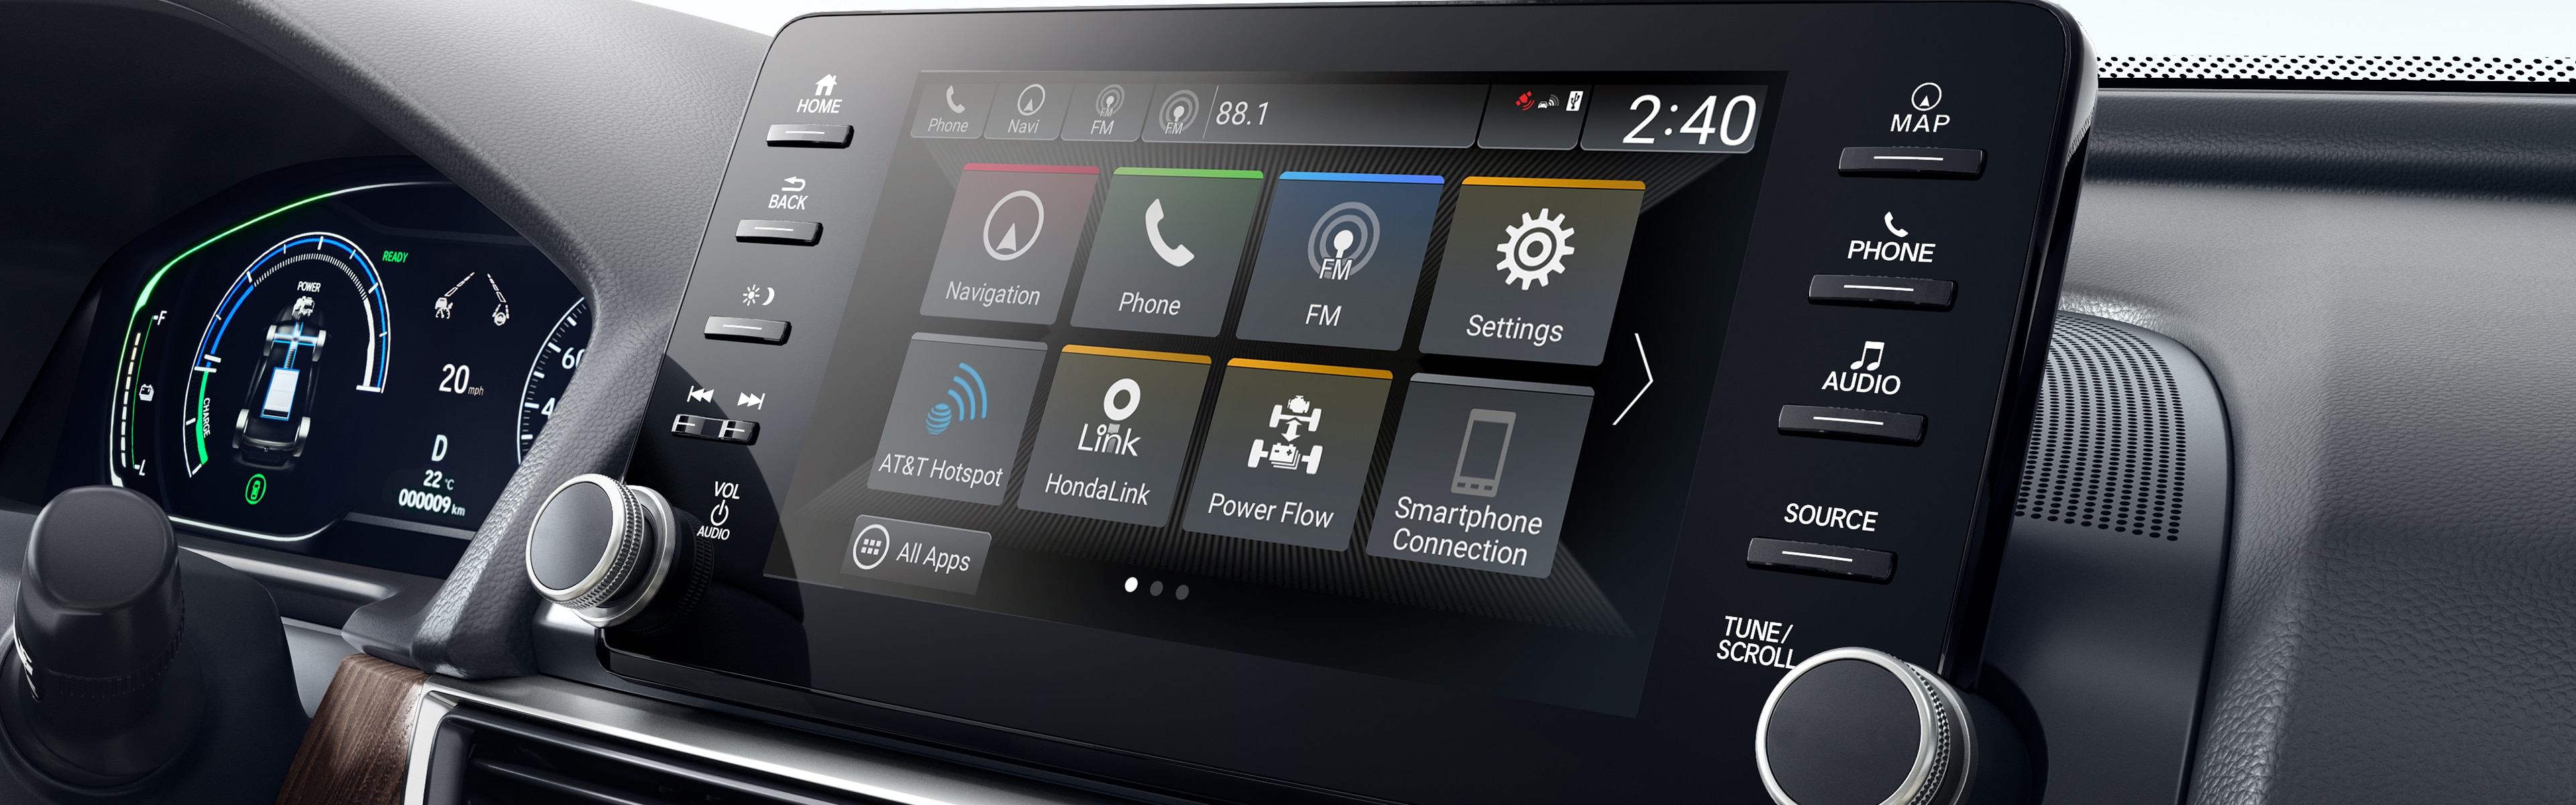 Image of 2021 Accord Hybrid display screen